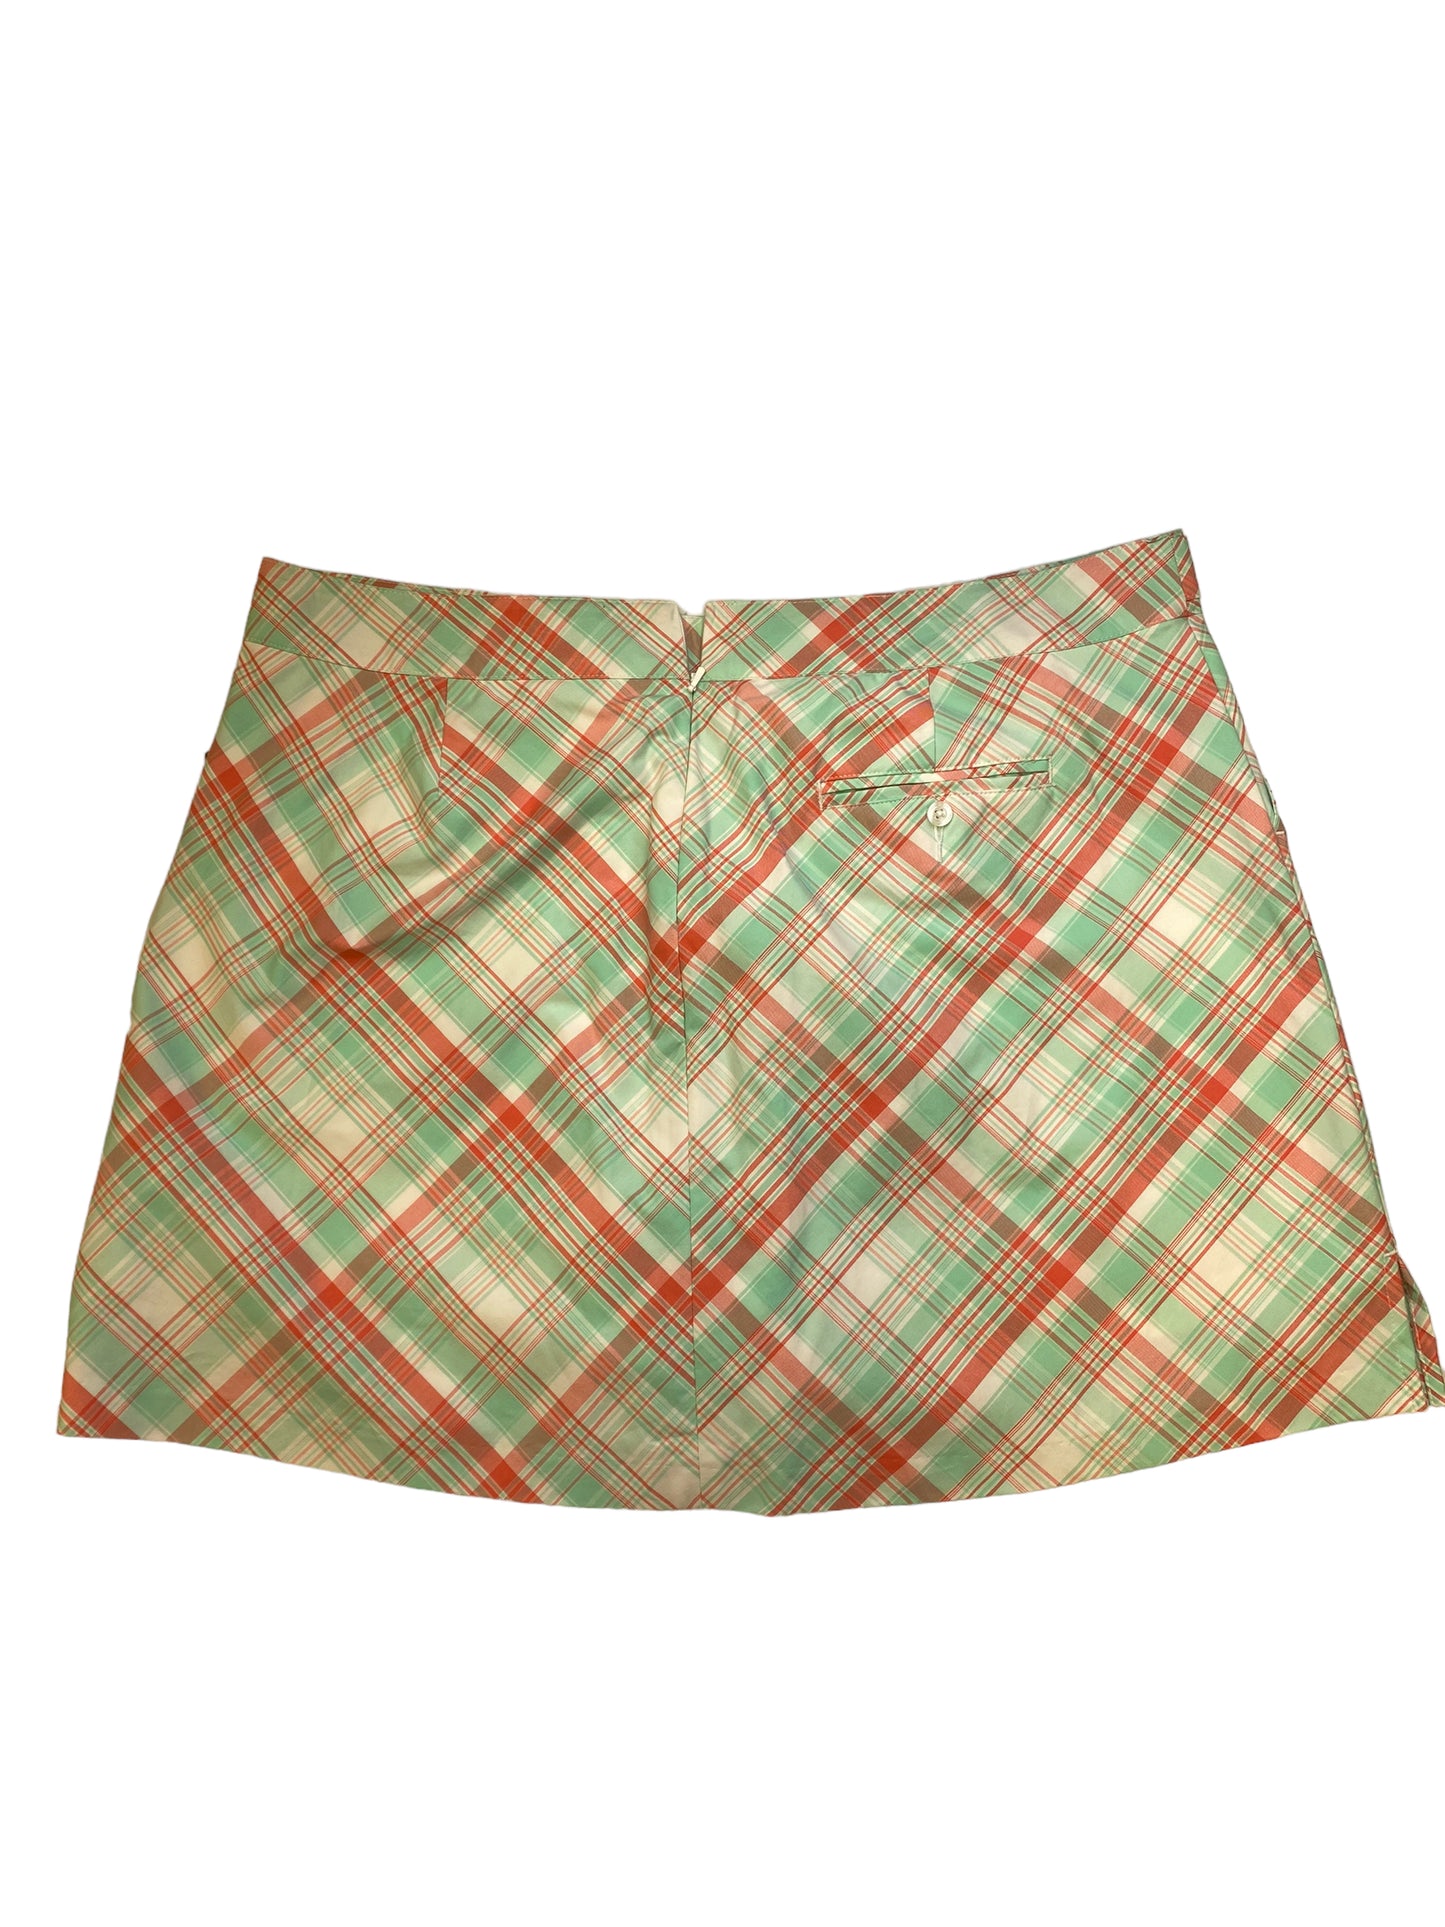 Athletic Skirt Skort By Lady Hagen  Size: 16